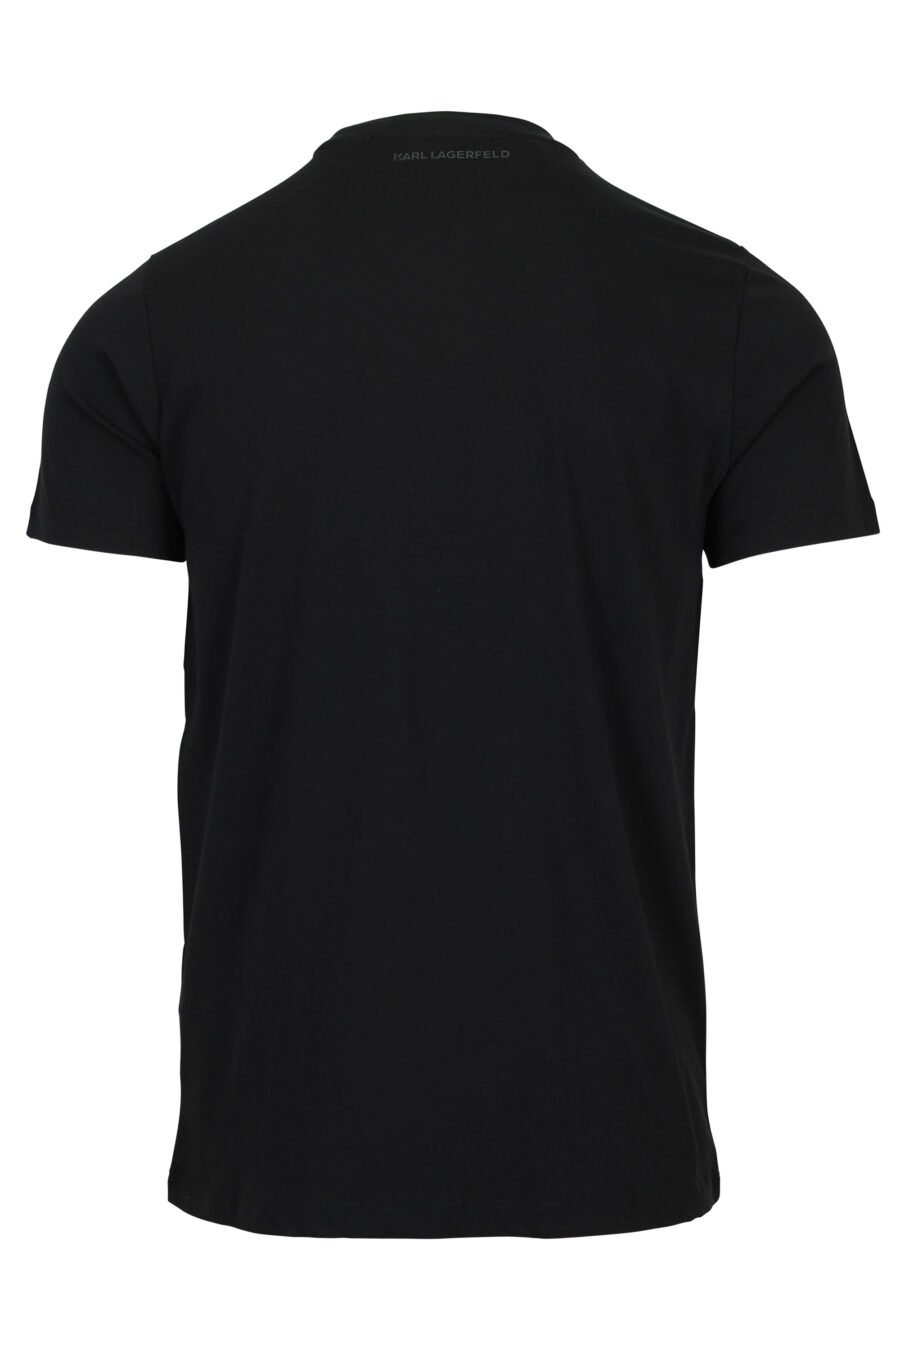 Camiseta negra con maxilogo "rue st guillaume" en relieve - 4062226963701 1